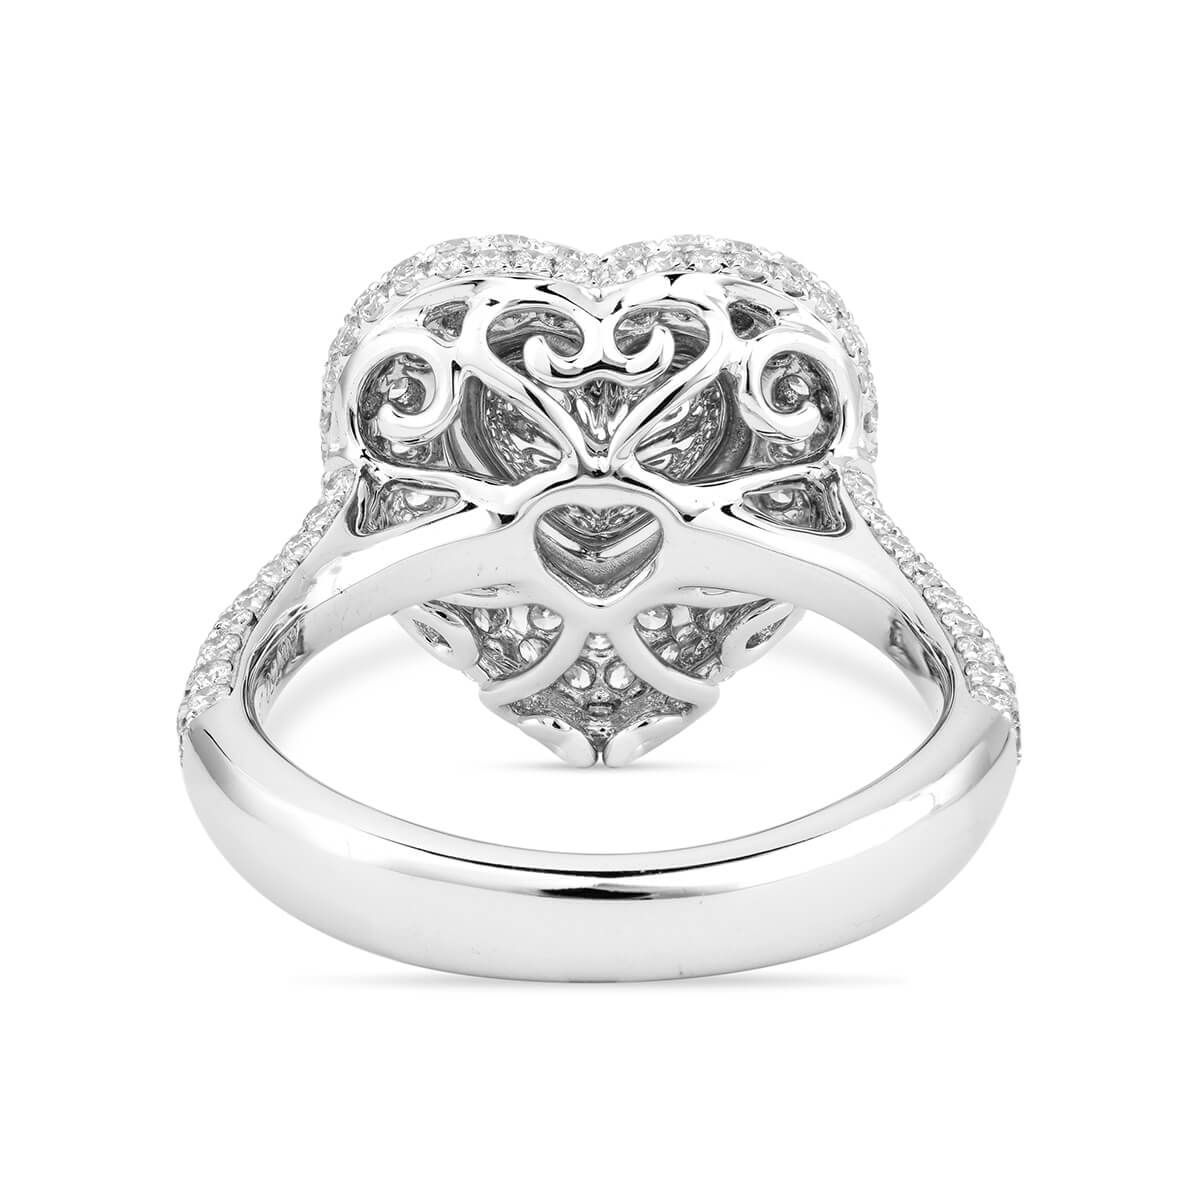 Fancy Intense Yellow Diamond Ring, 2.24 Ct. TW, Heart shape, GIA Certified, 6197178052